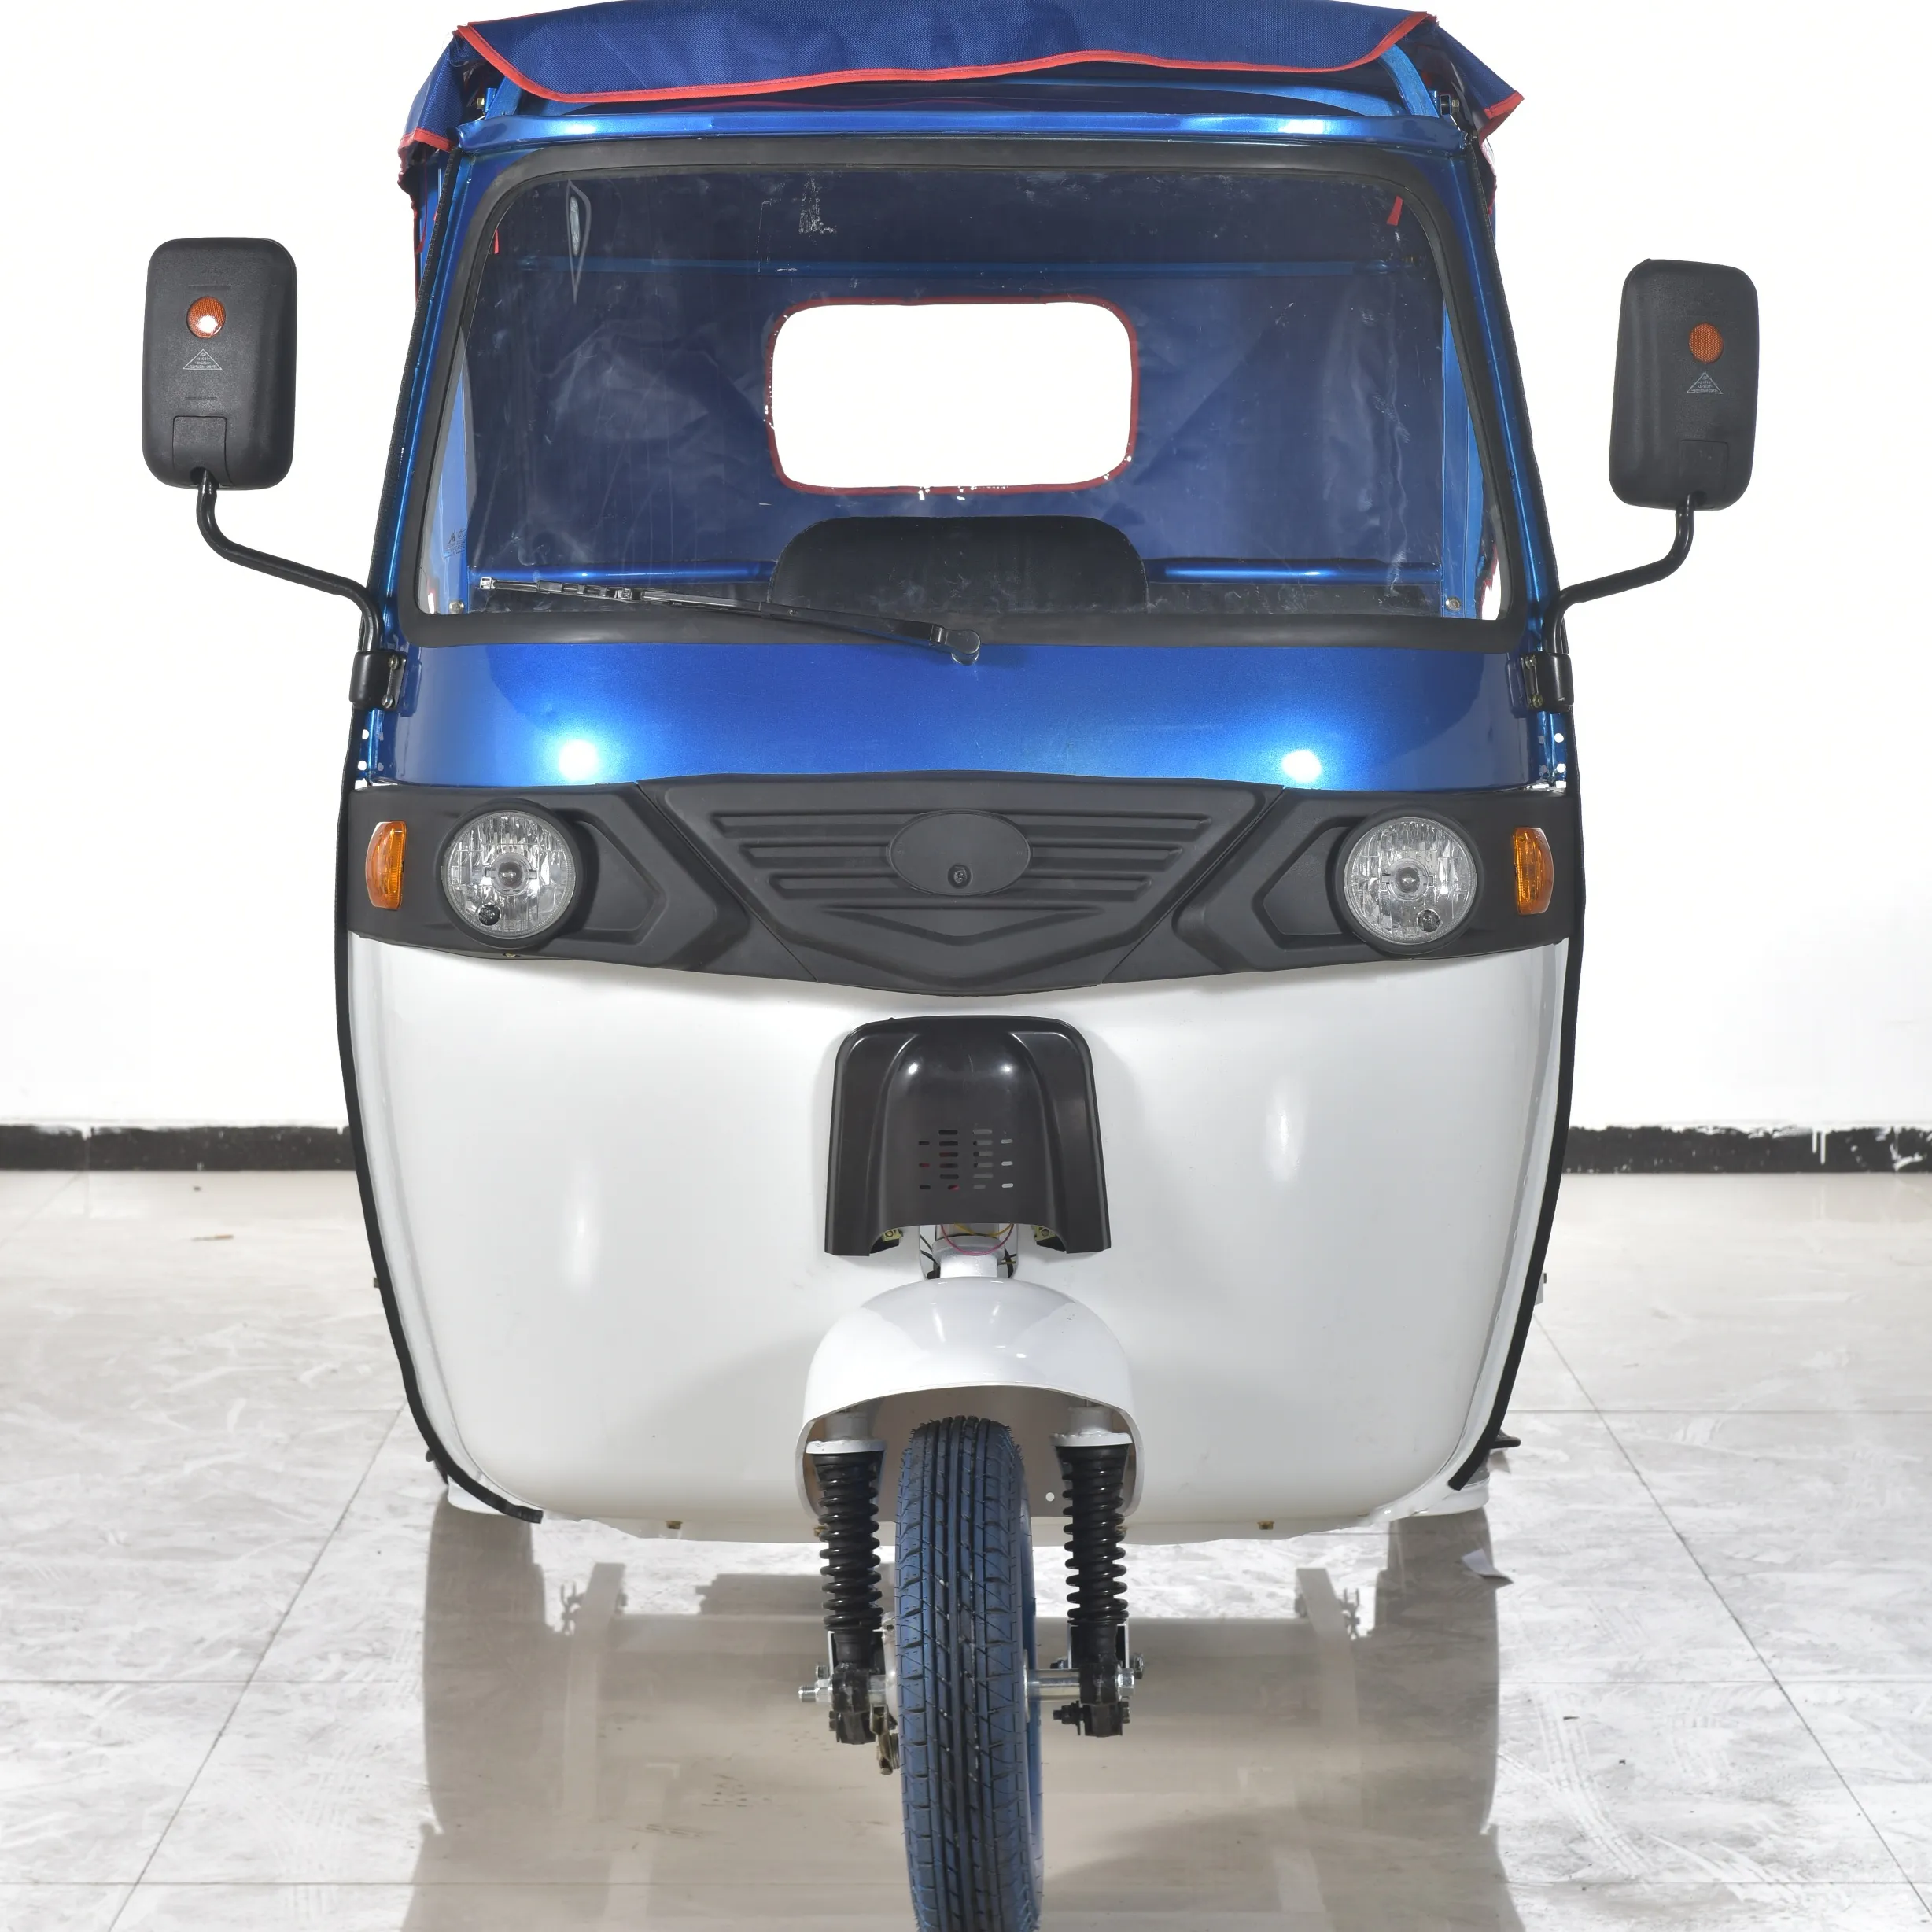 2023 De Geruststellende Driewielers En Tuk-Tuk Voor De Elektrische Driewieler En Auto-E-Riksja